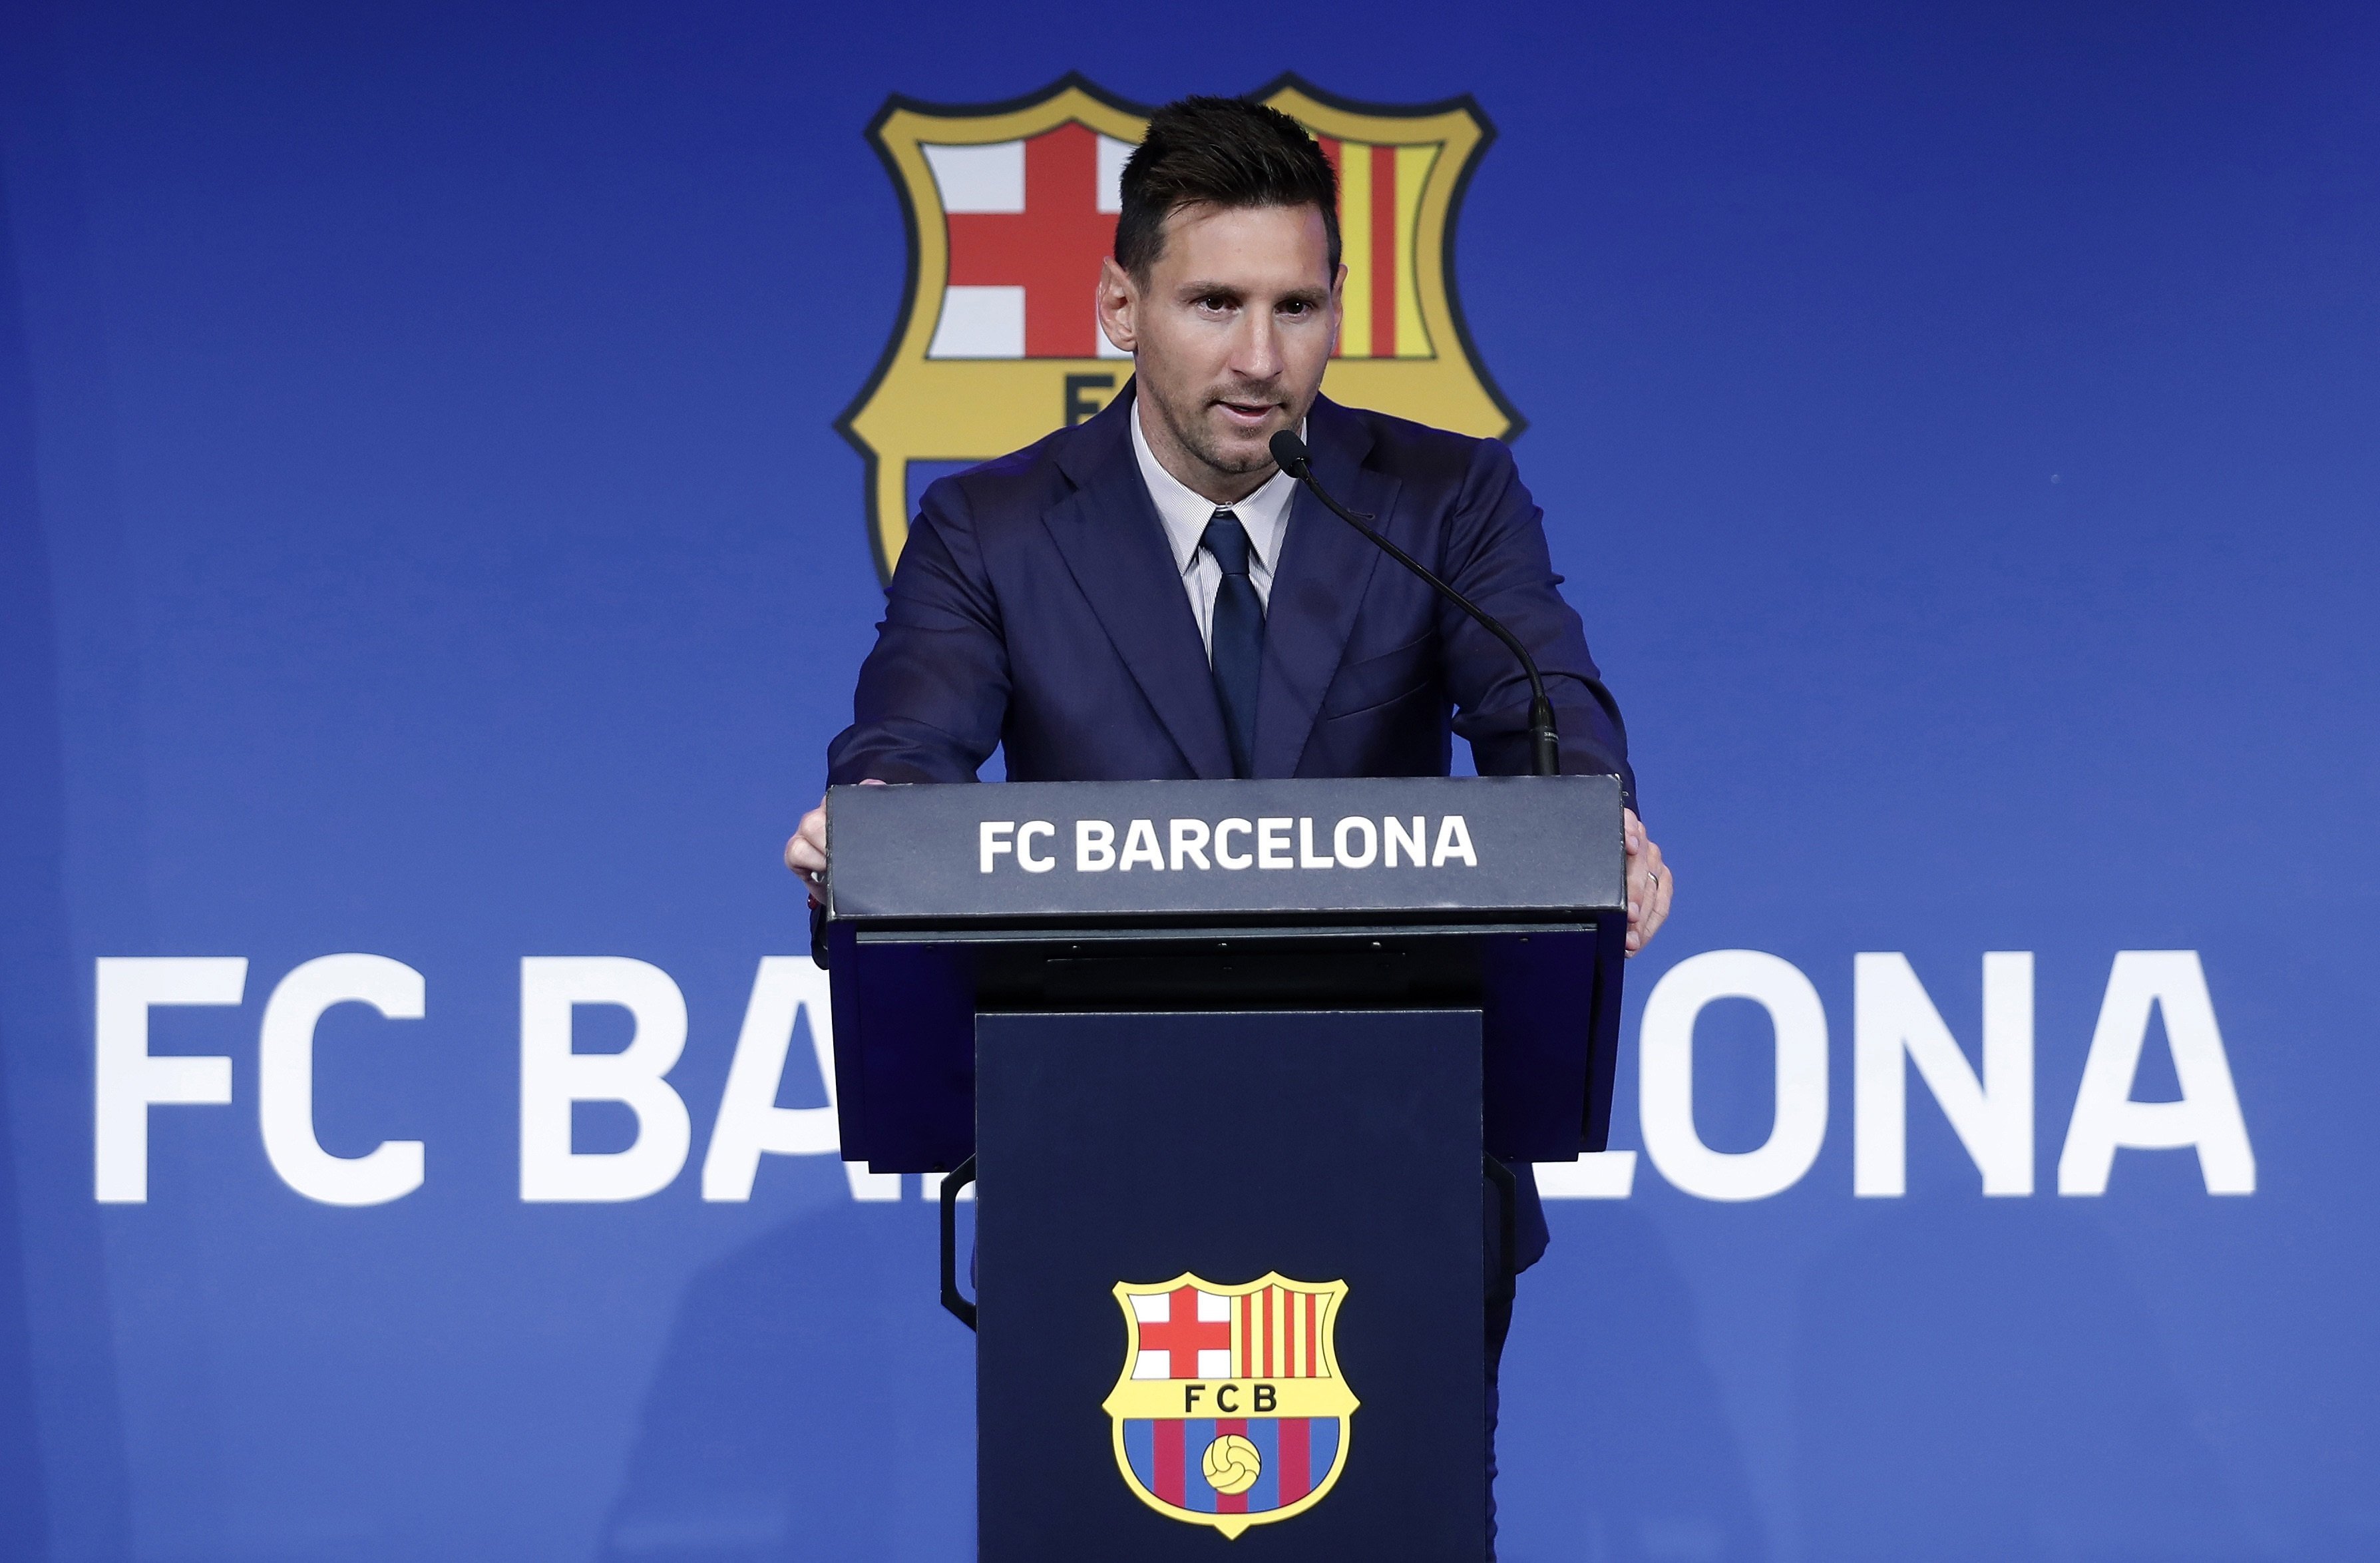 L'impecable discurs de Messi acomiadant-se del Barça